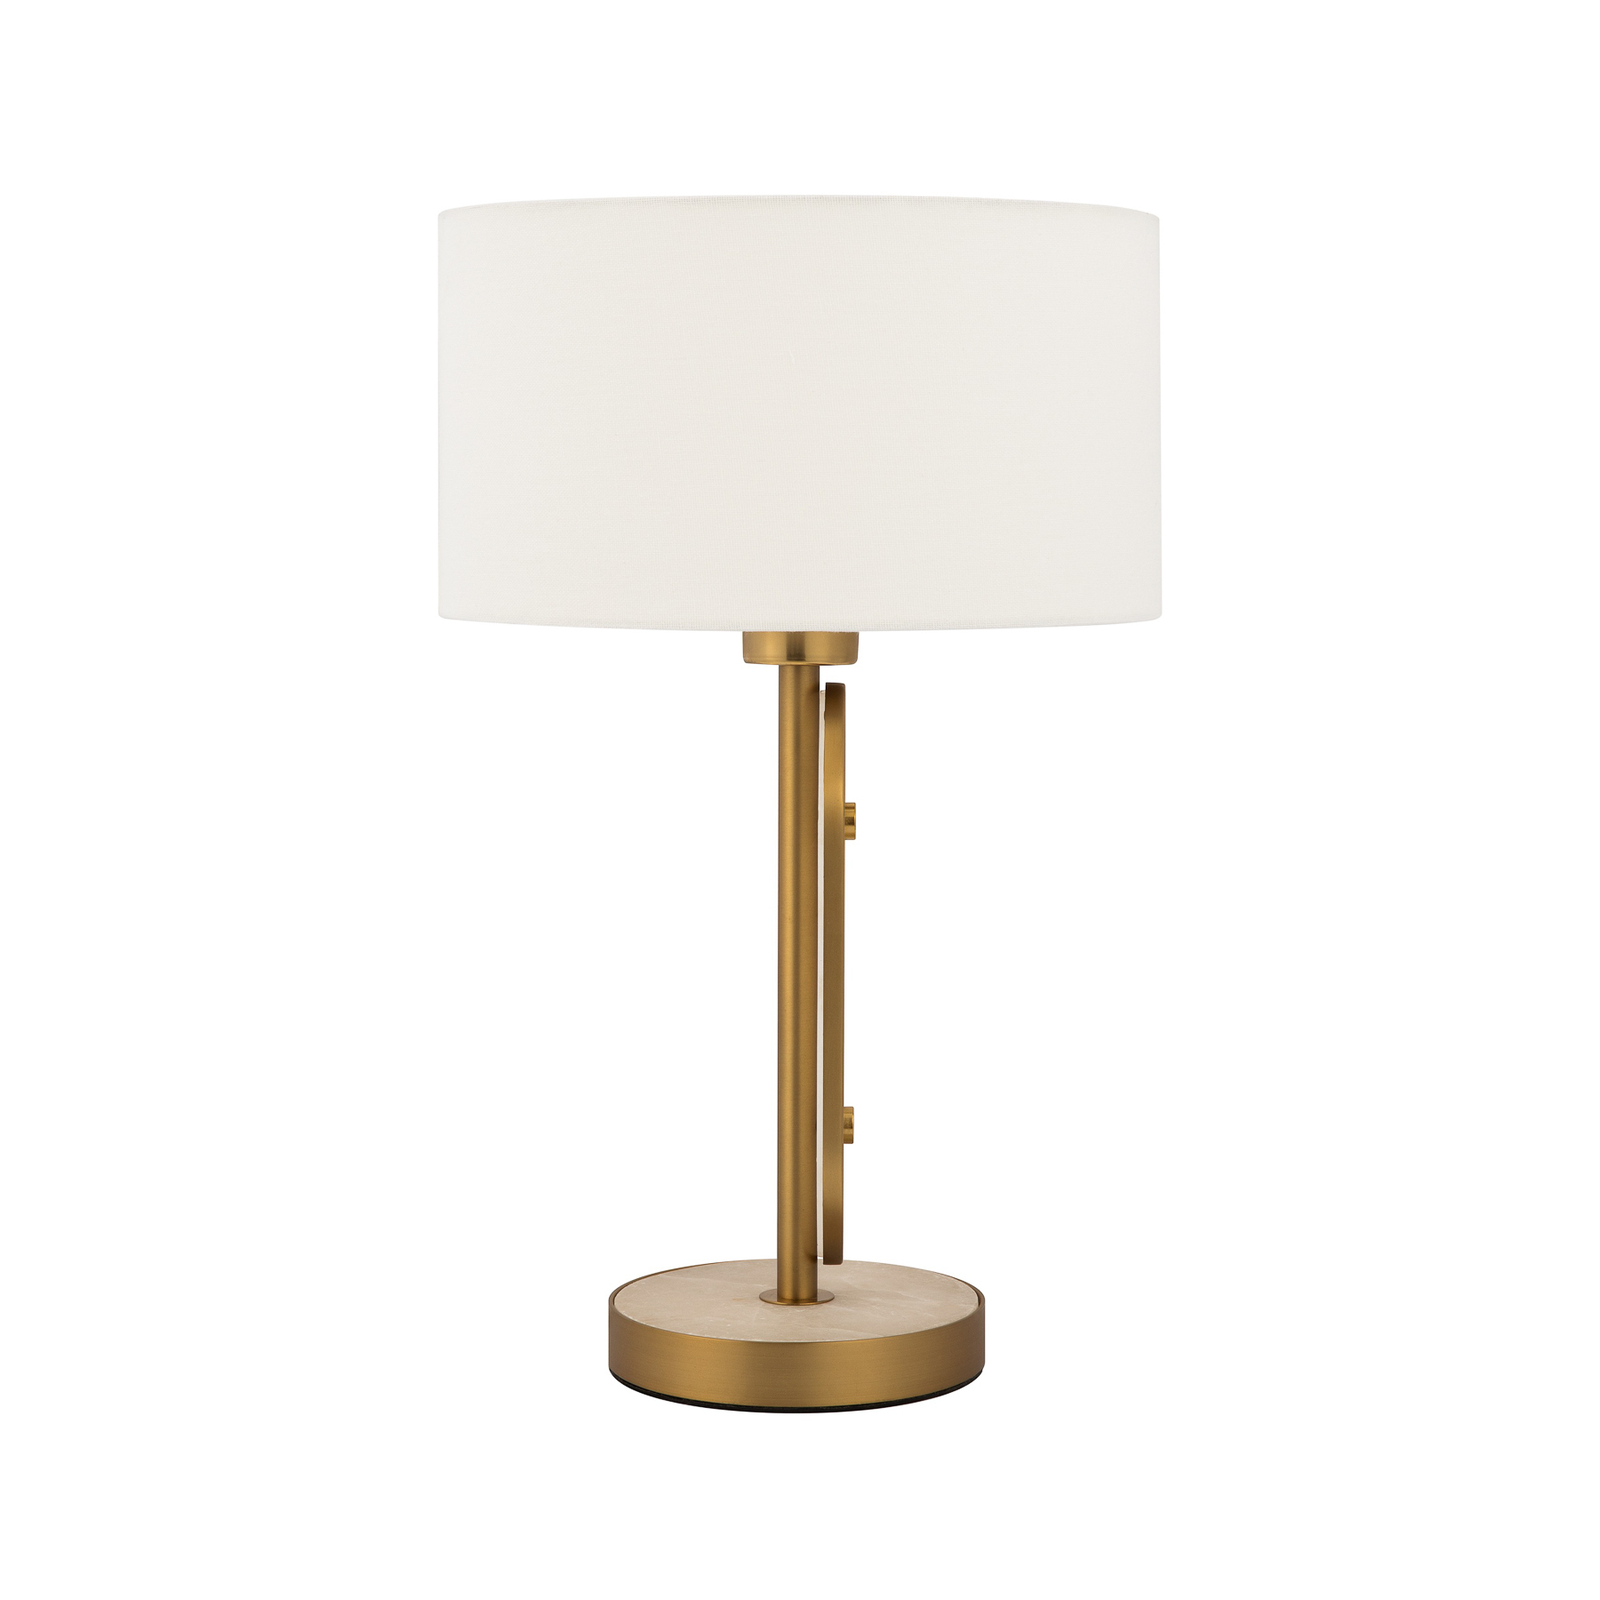 Maytoni Marmo table lamp, gold colour/natural stone